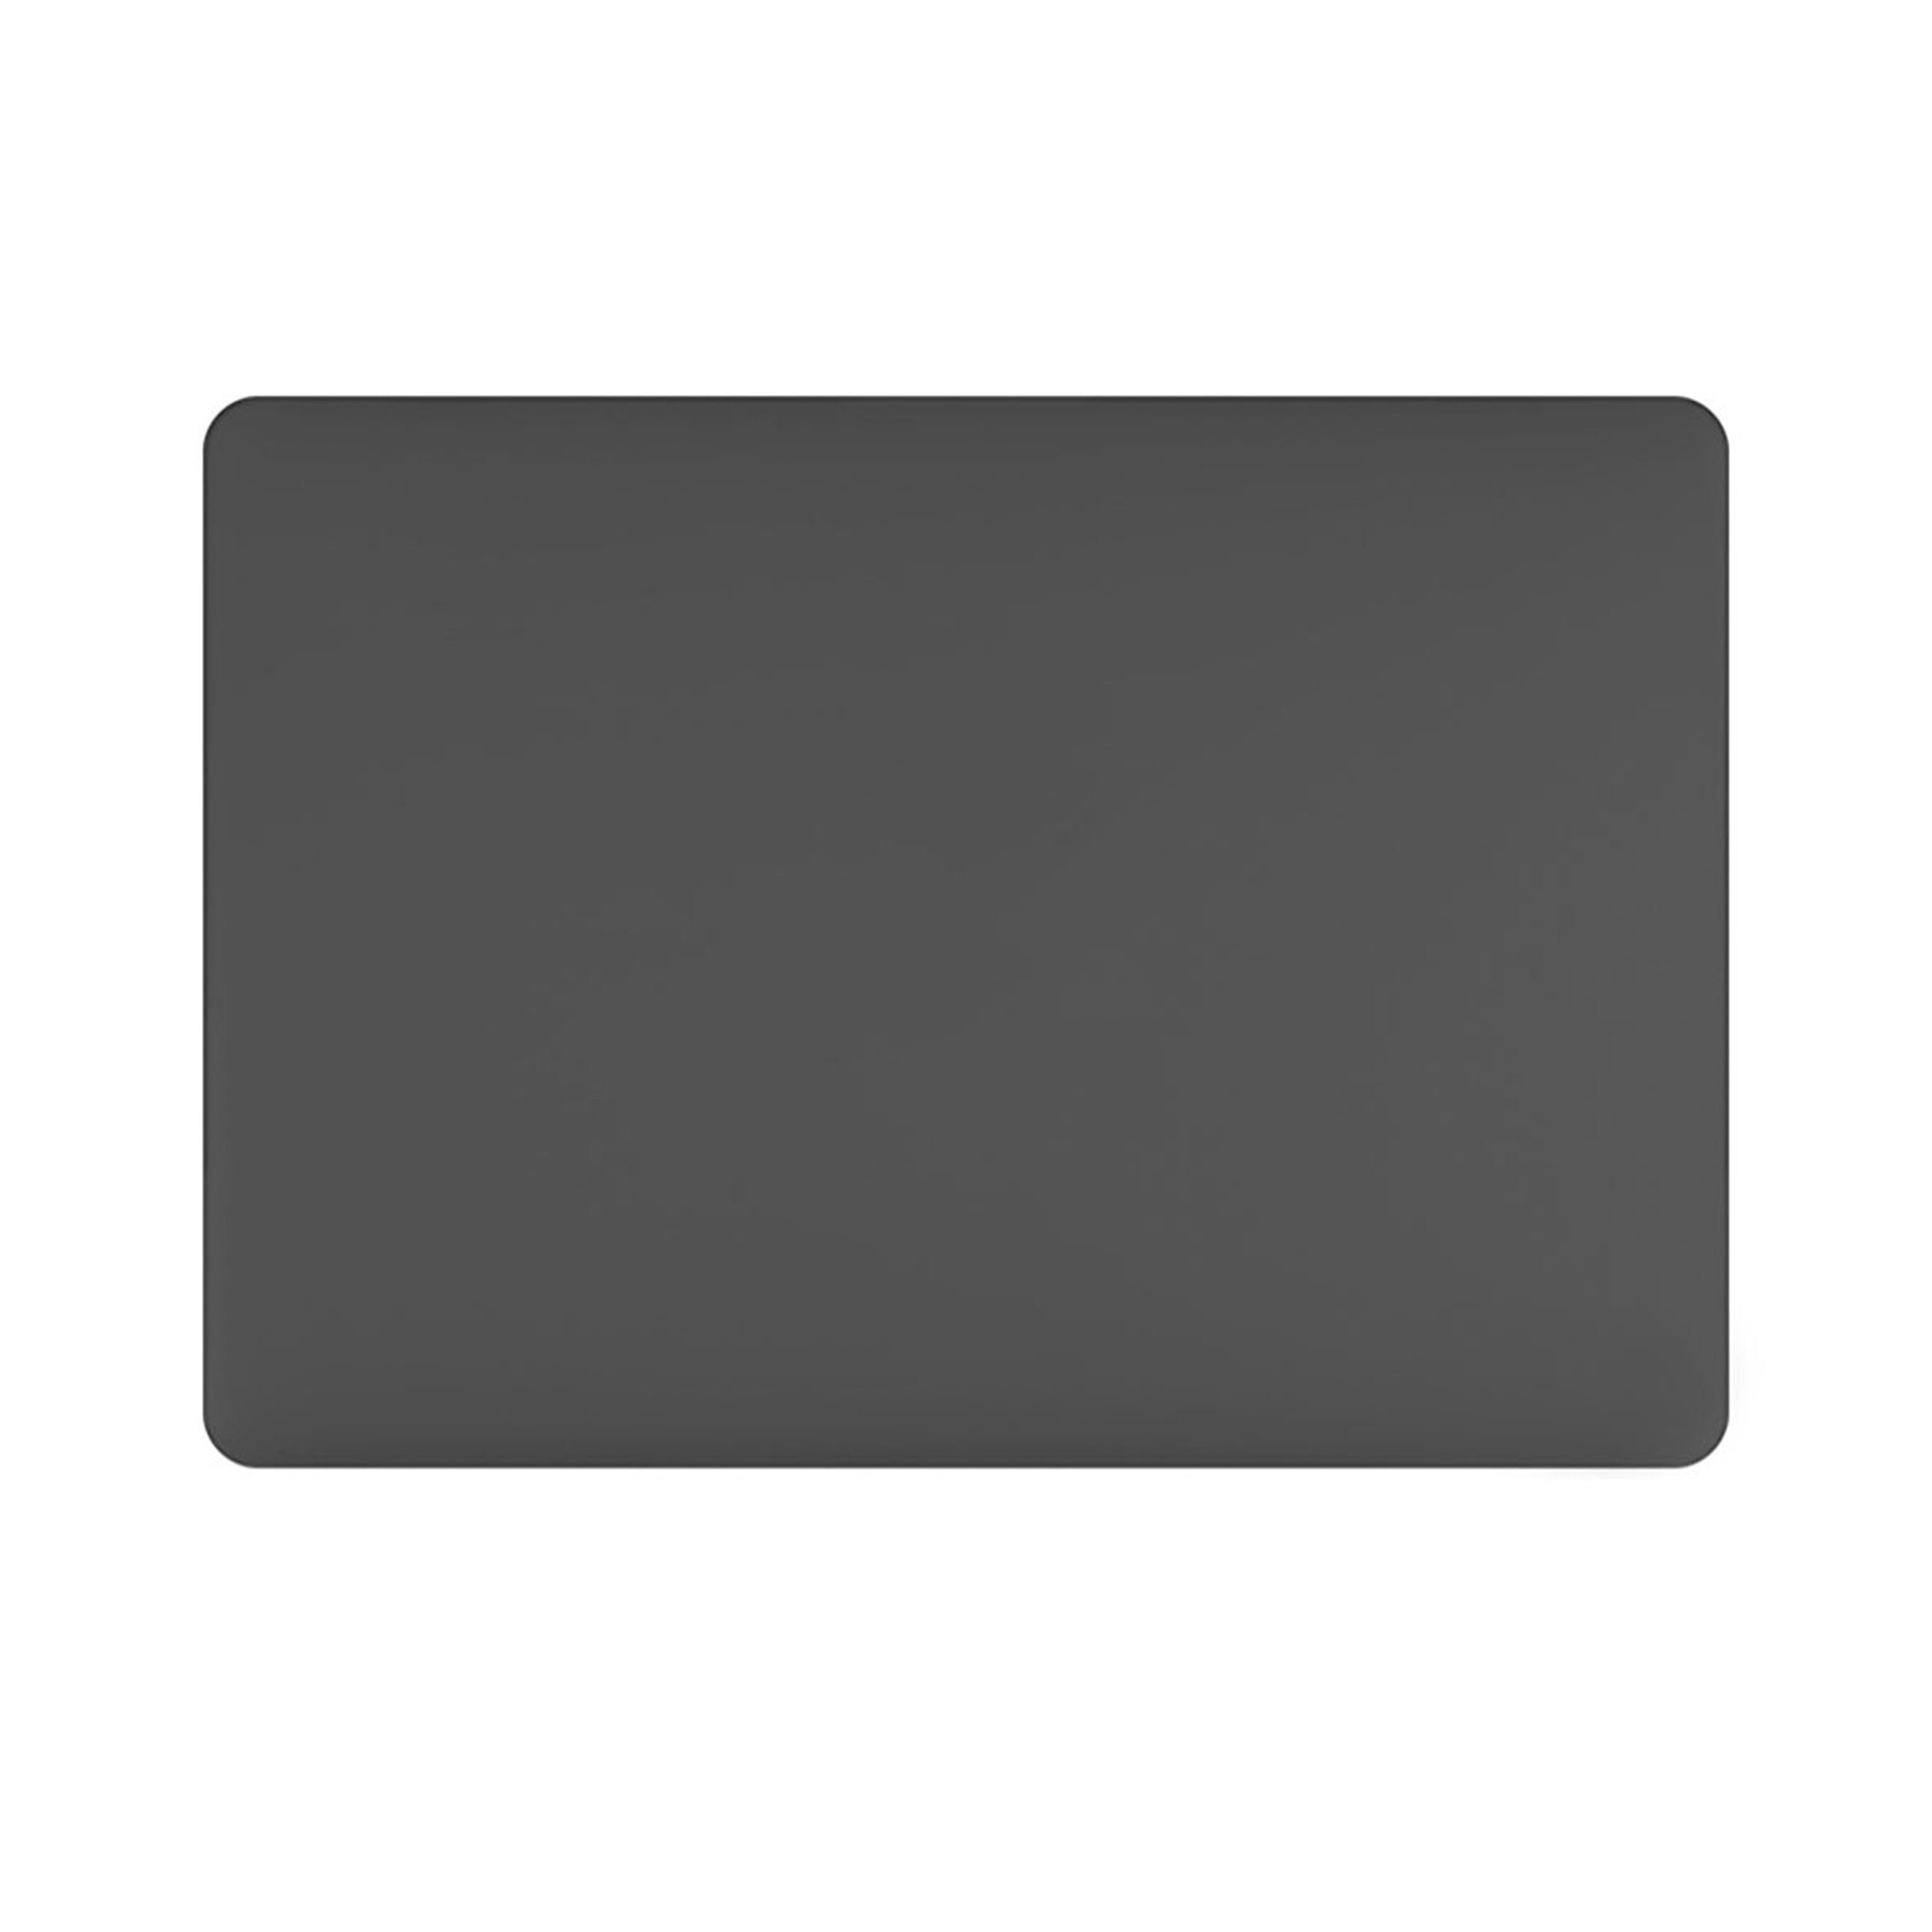 KMP Creative Lifesytle Product Laptop-Hülle Schutzhülle für 13" MacBook Pro mit touch bar Black-Translucent 33,02 cm (13 Zoll), Hülle, Tasche, leicht, Schutz, Schale, dünn, Laptop Hülle, Schutzhülle